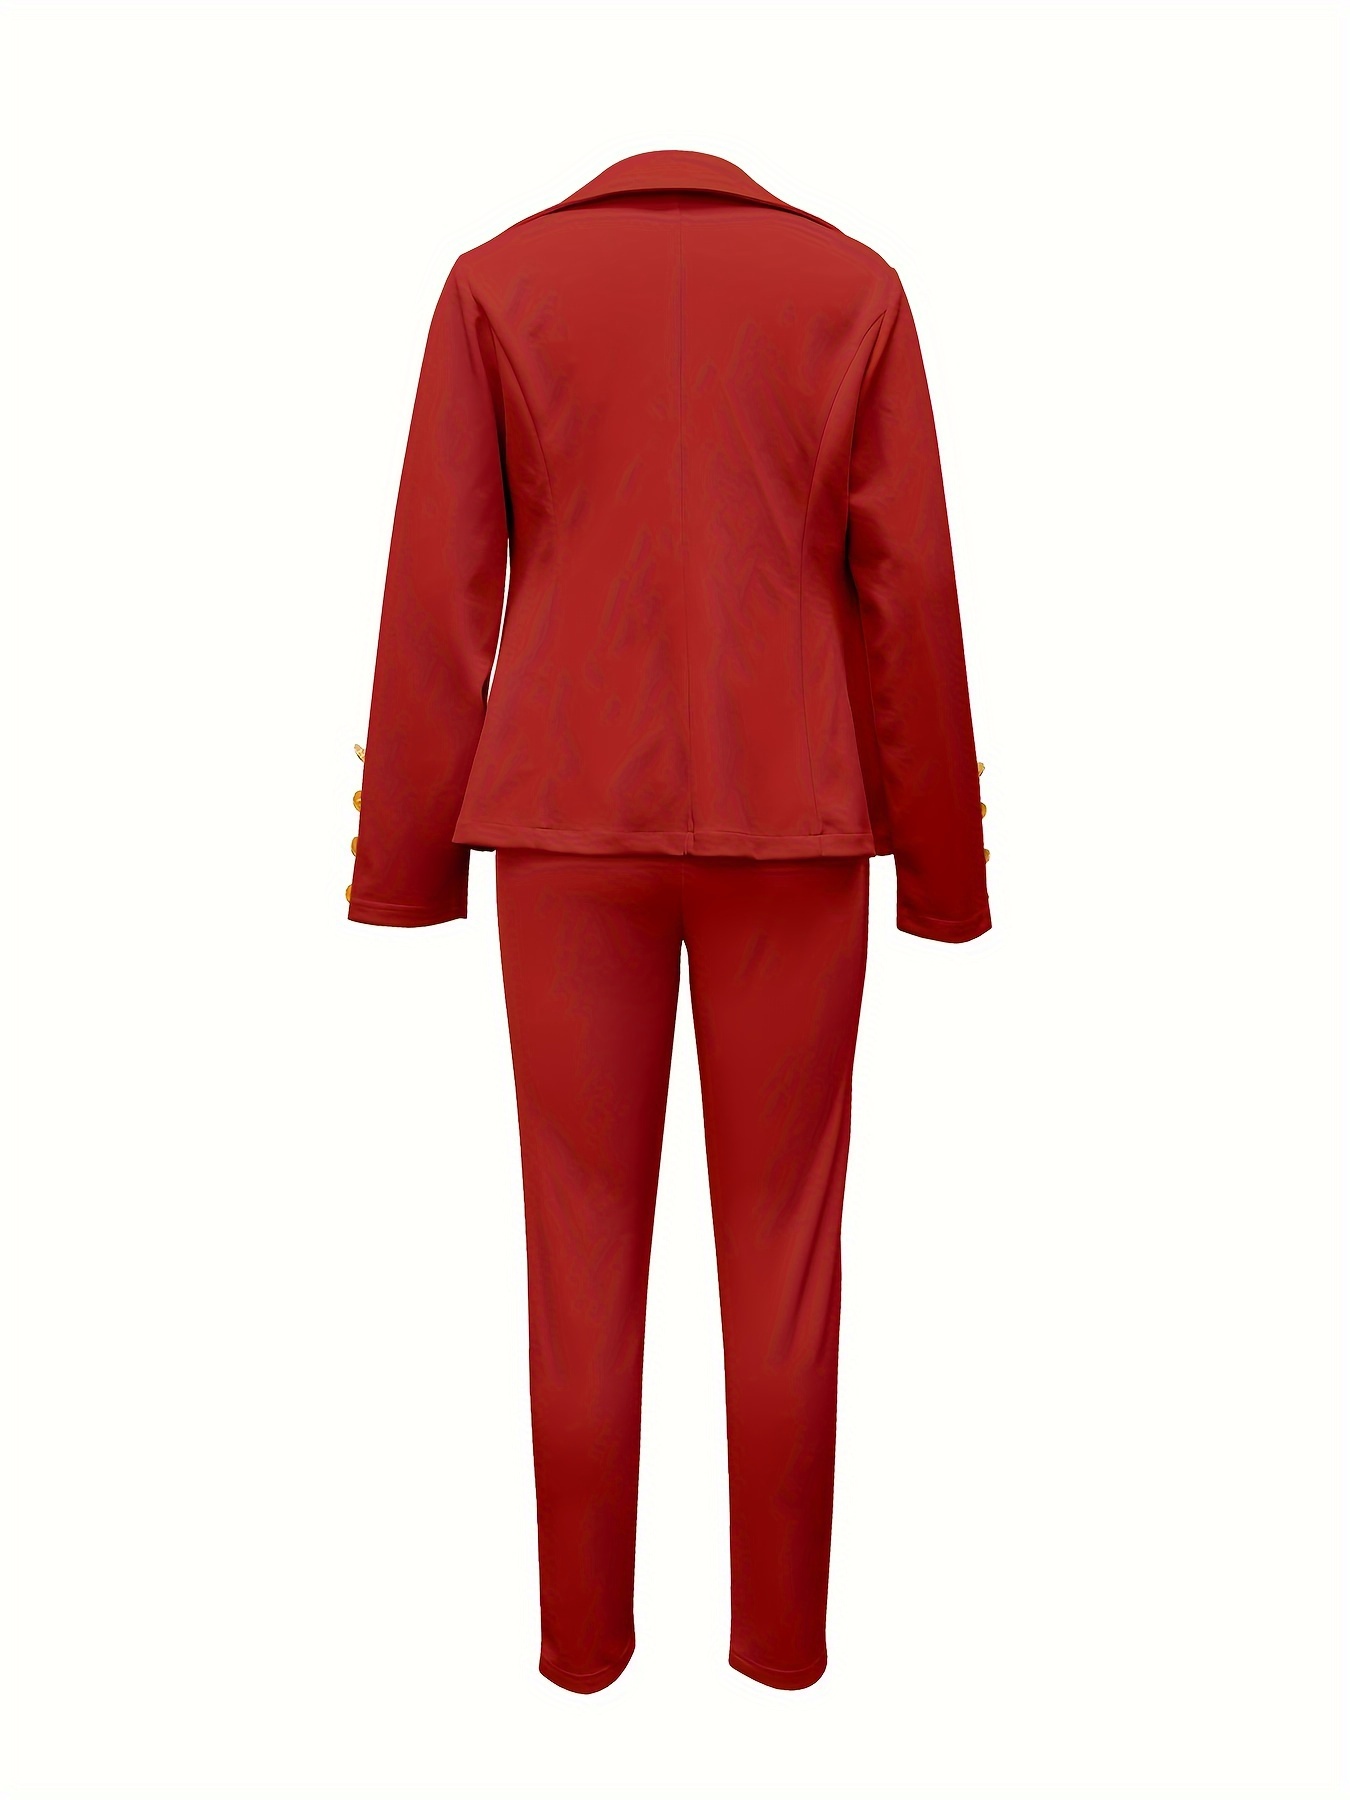 Women's Caslon Red Pant suit size 12 - clothing & accessories - by owner -  apparel sale - craigslist